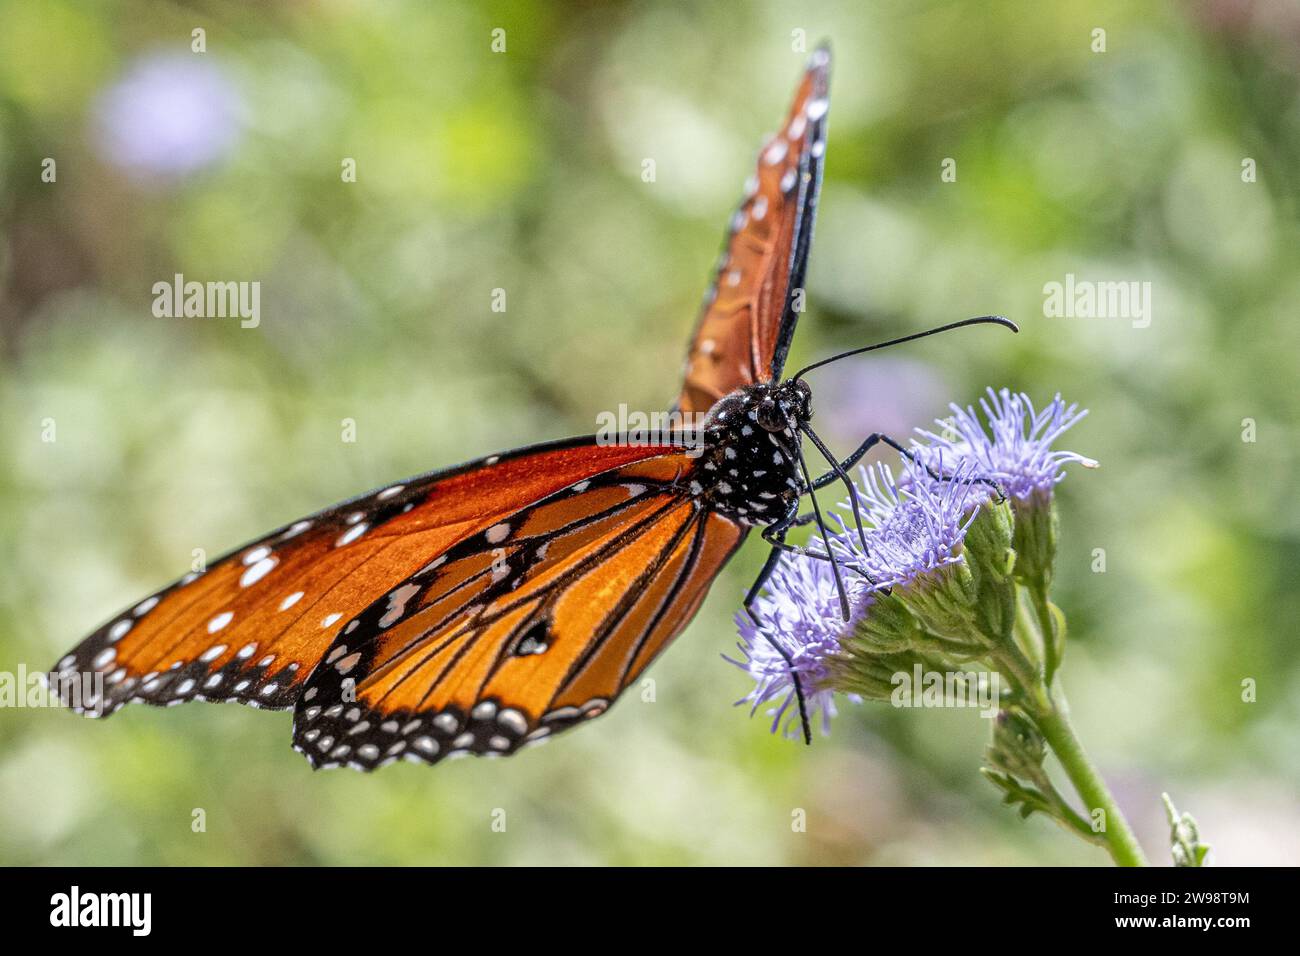 Queen butterfly Danaus gilippus feeding on garden flower nectar - Müllerian co-mimics orange Monarch aka mimic insect - proboscis extended wing detail Stock Photo